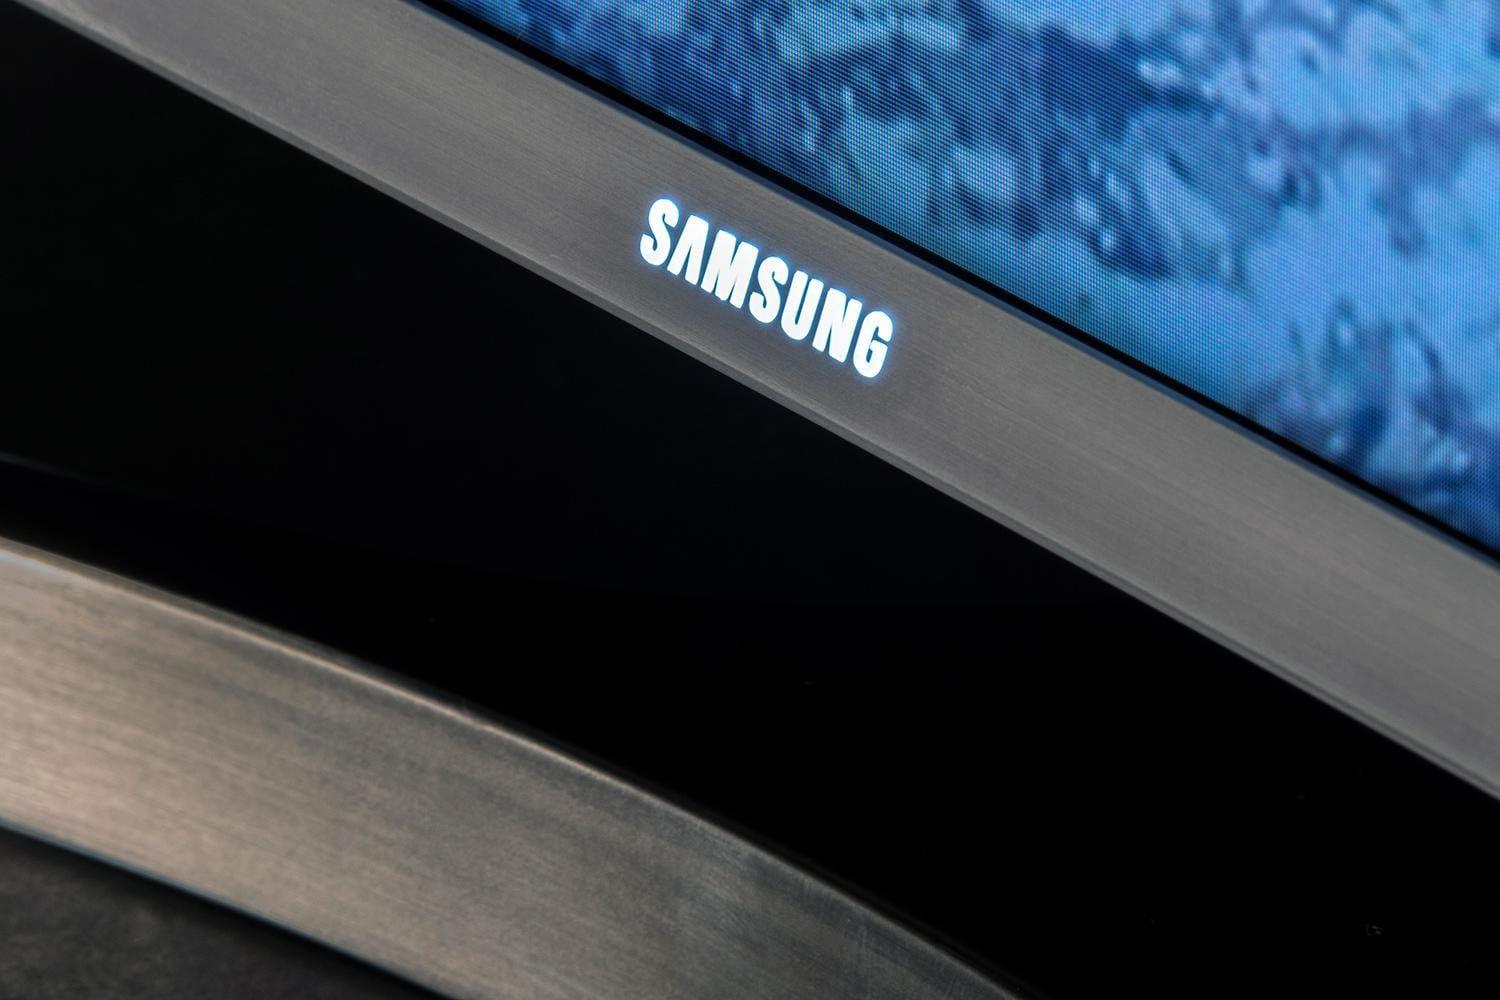 Samsung TV Logo - Samsung UN65JS9500 Review & Rating | Digital Trends